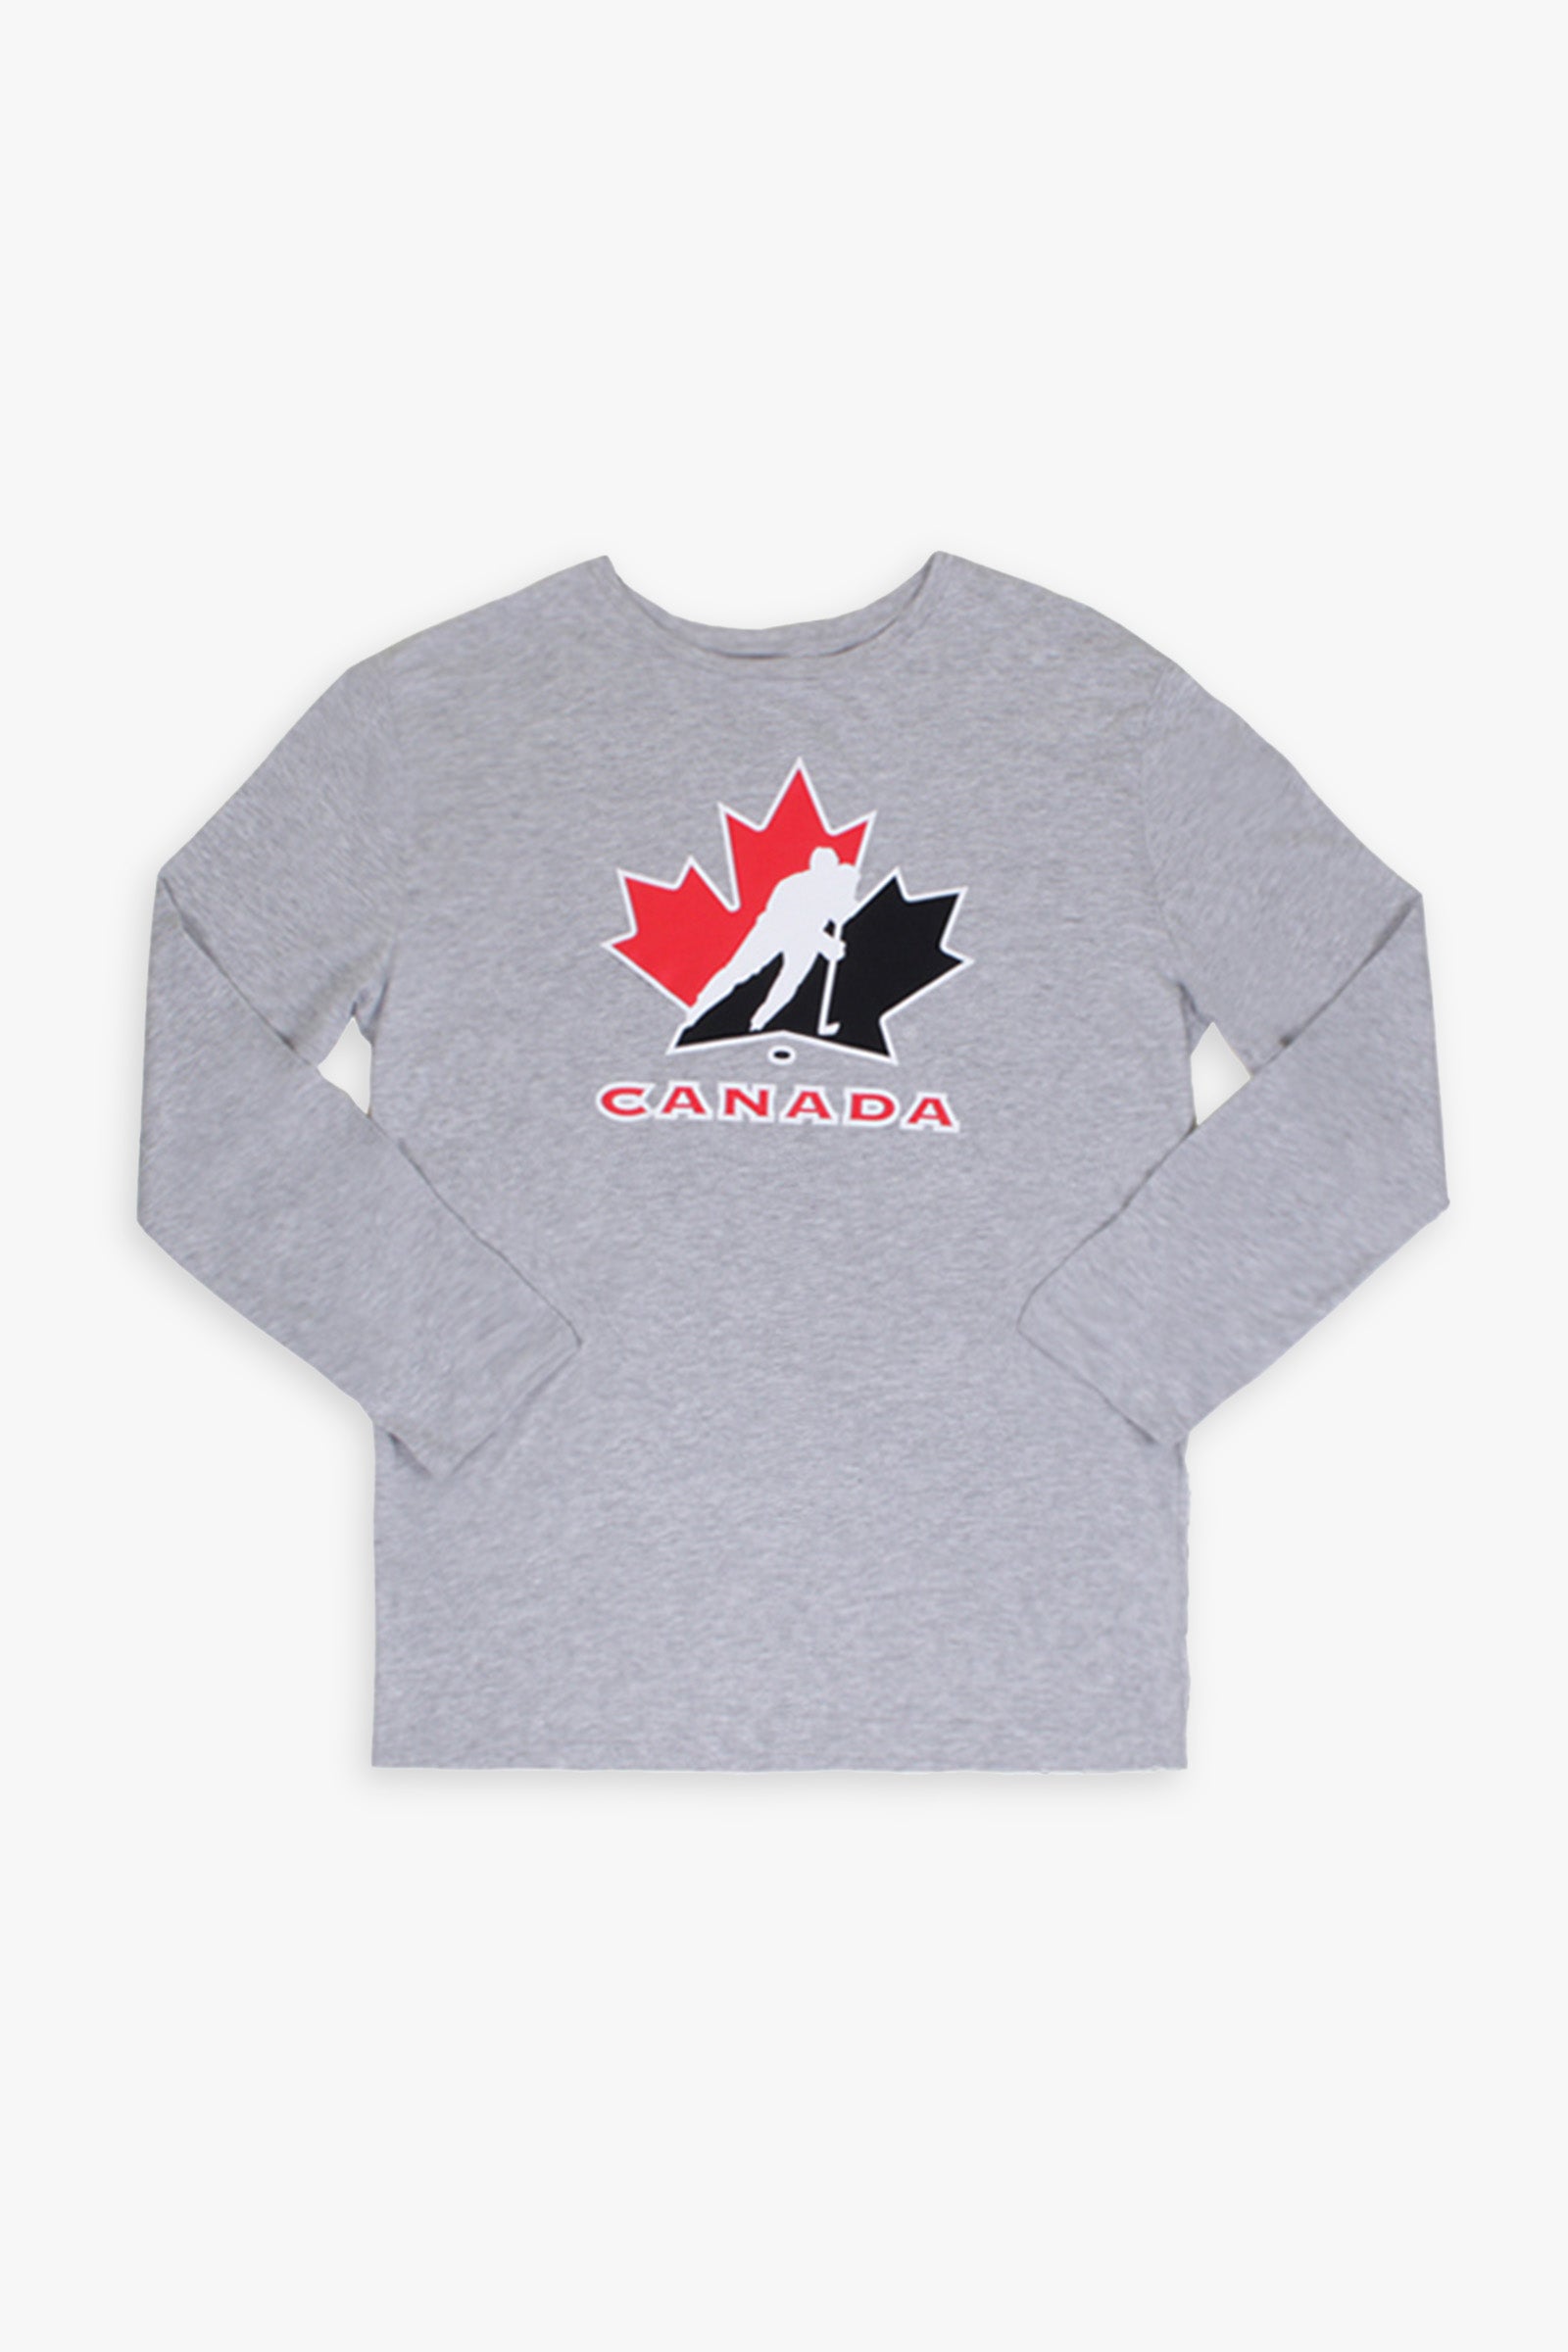 Gertex Hockey Canada Men's Long Sleeve Shirt